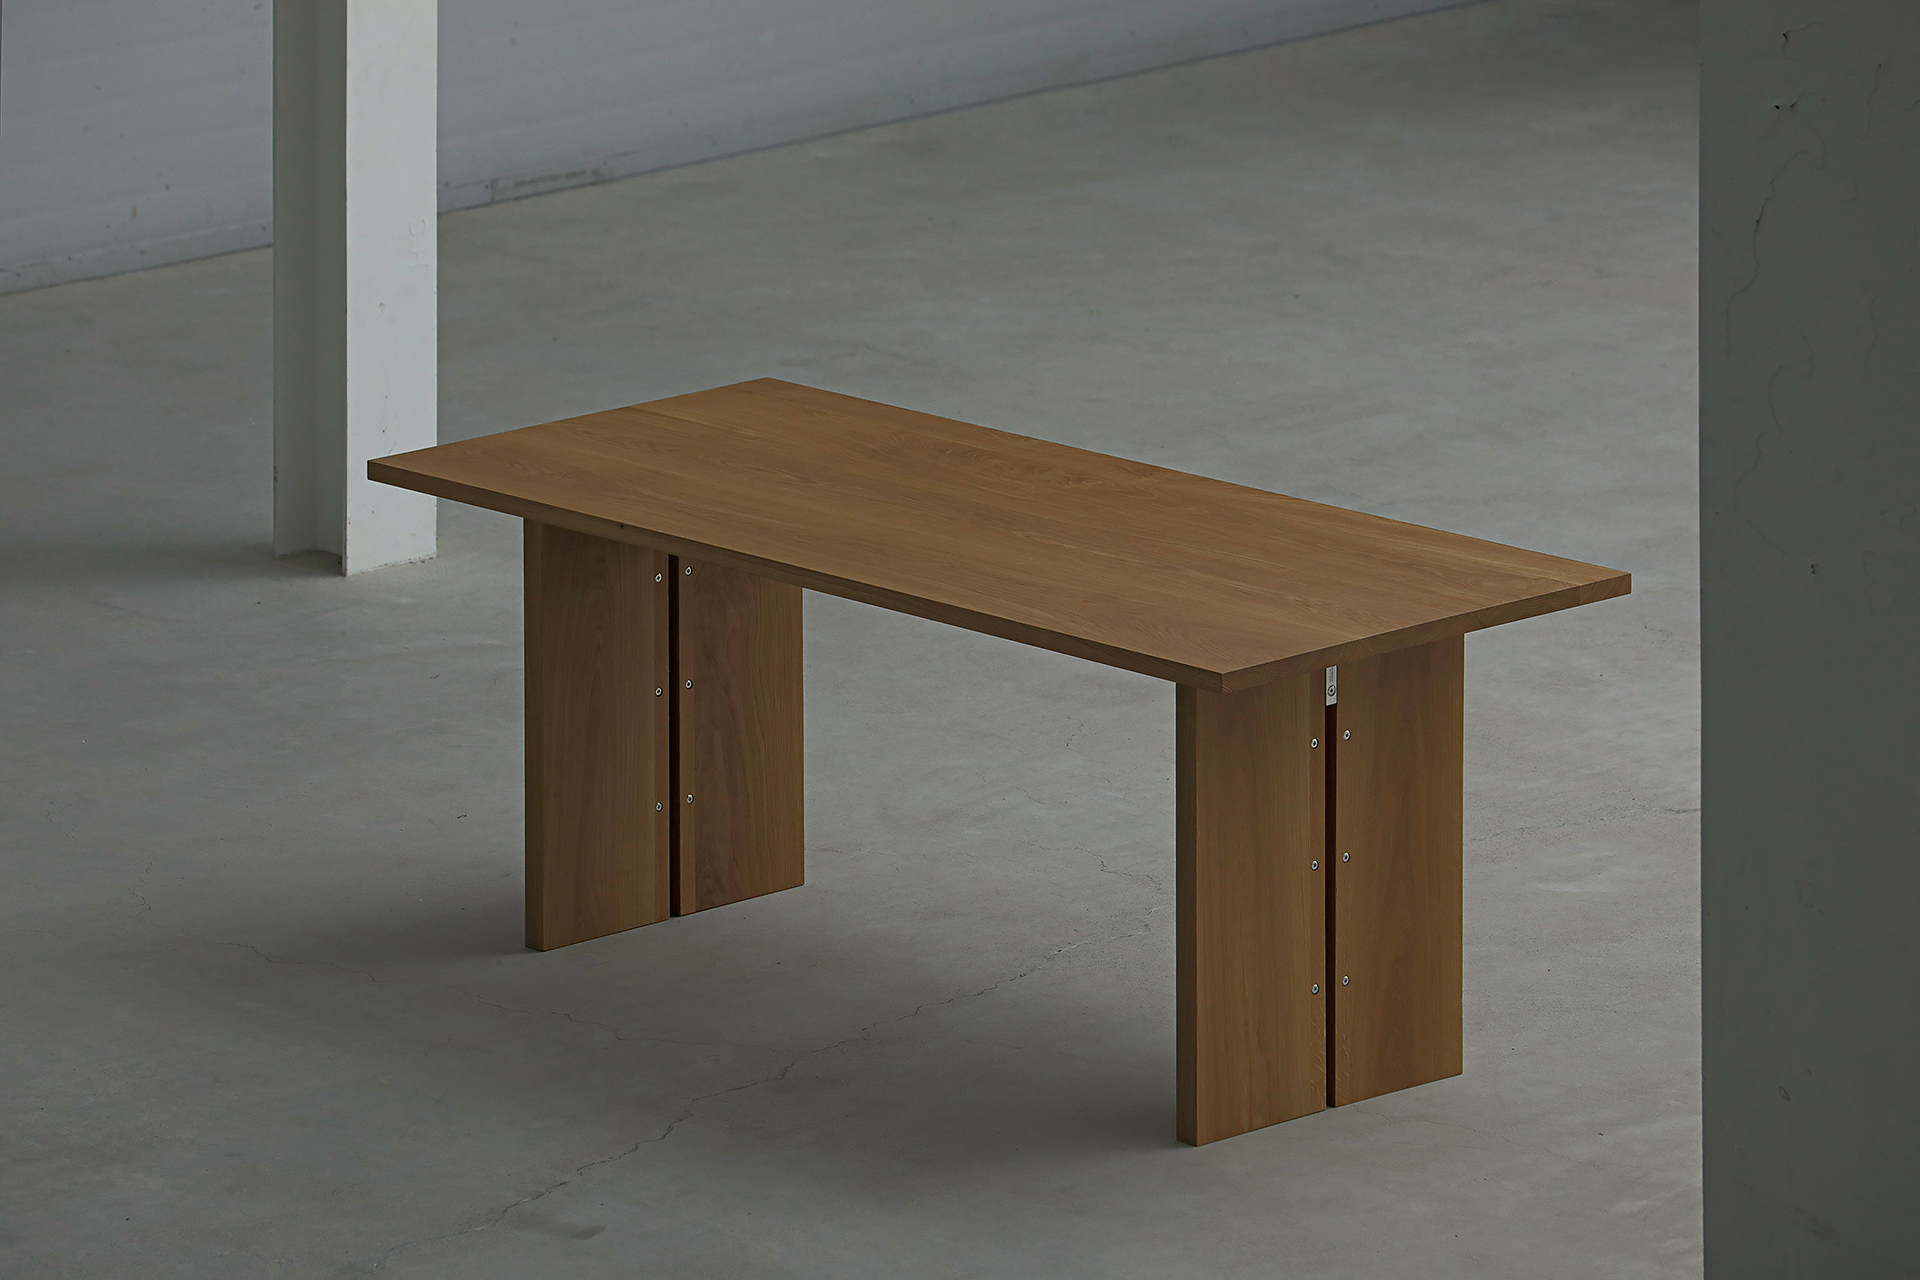 JC901 TABLE / DESIGNED BY JOONGHOCHOI STUDIO